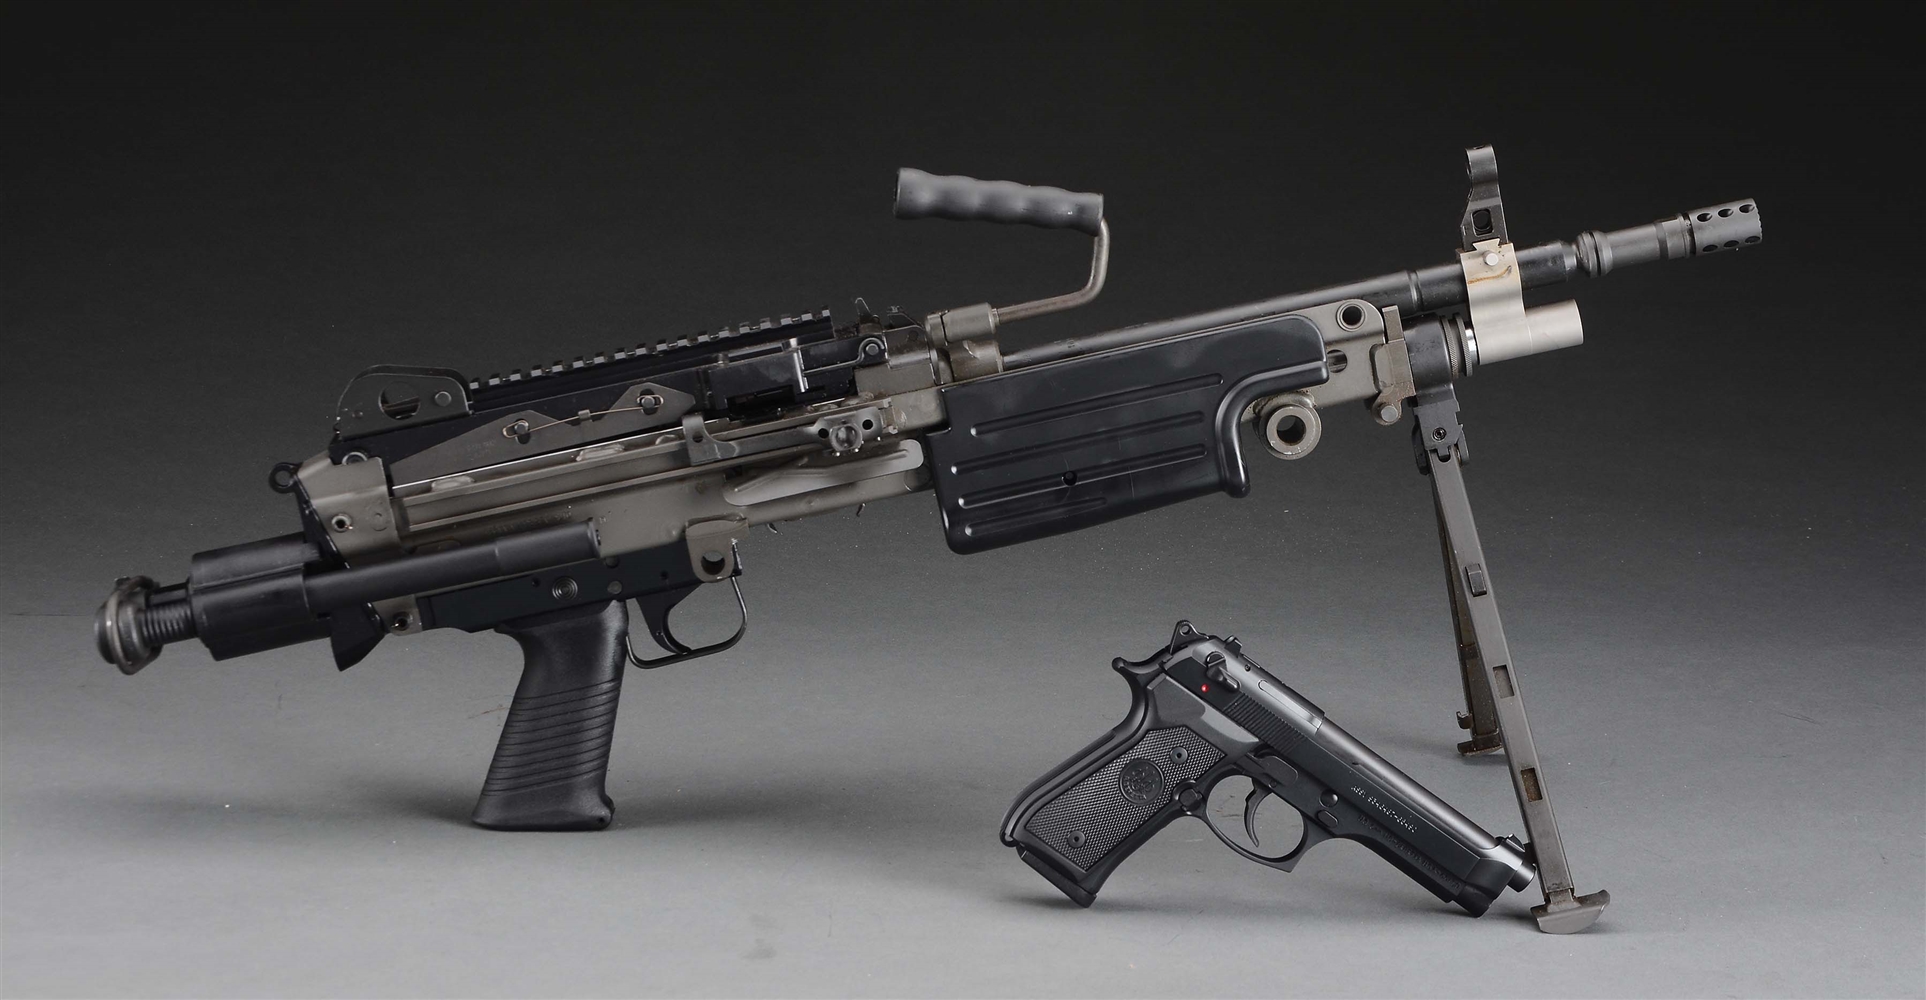 (M) FANTASTIC CONDITION CASED FN M249S SEMI-AUTOMATIC BELT FED RIFLE IN CASE WITH COMPANION BERETTA M9 PISTOL